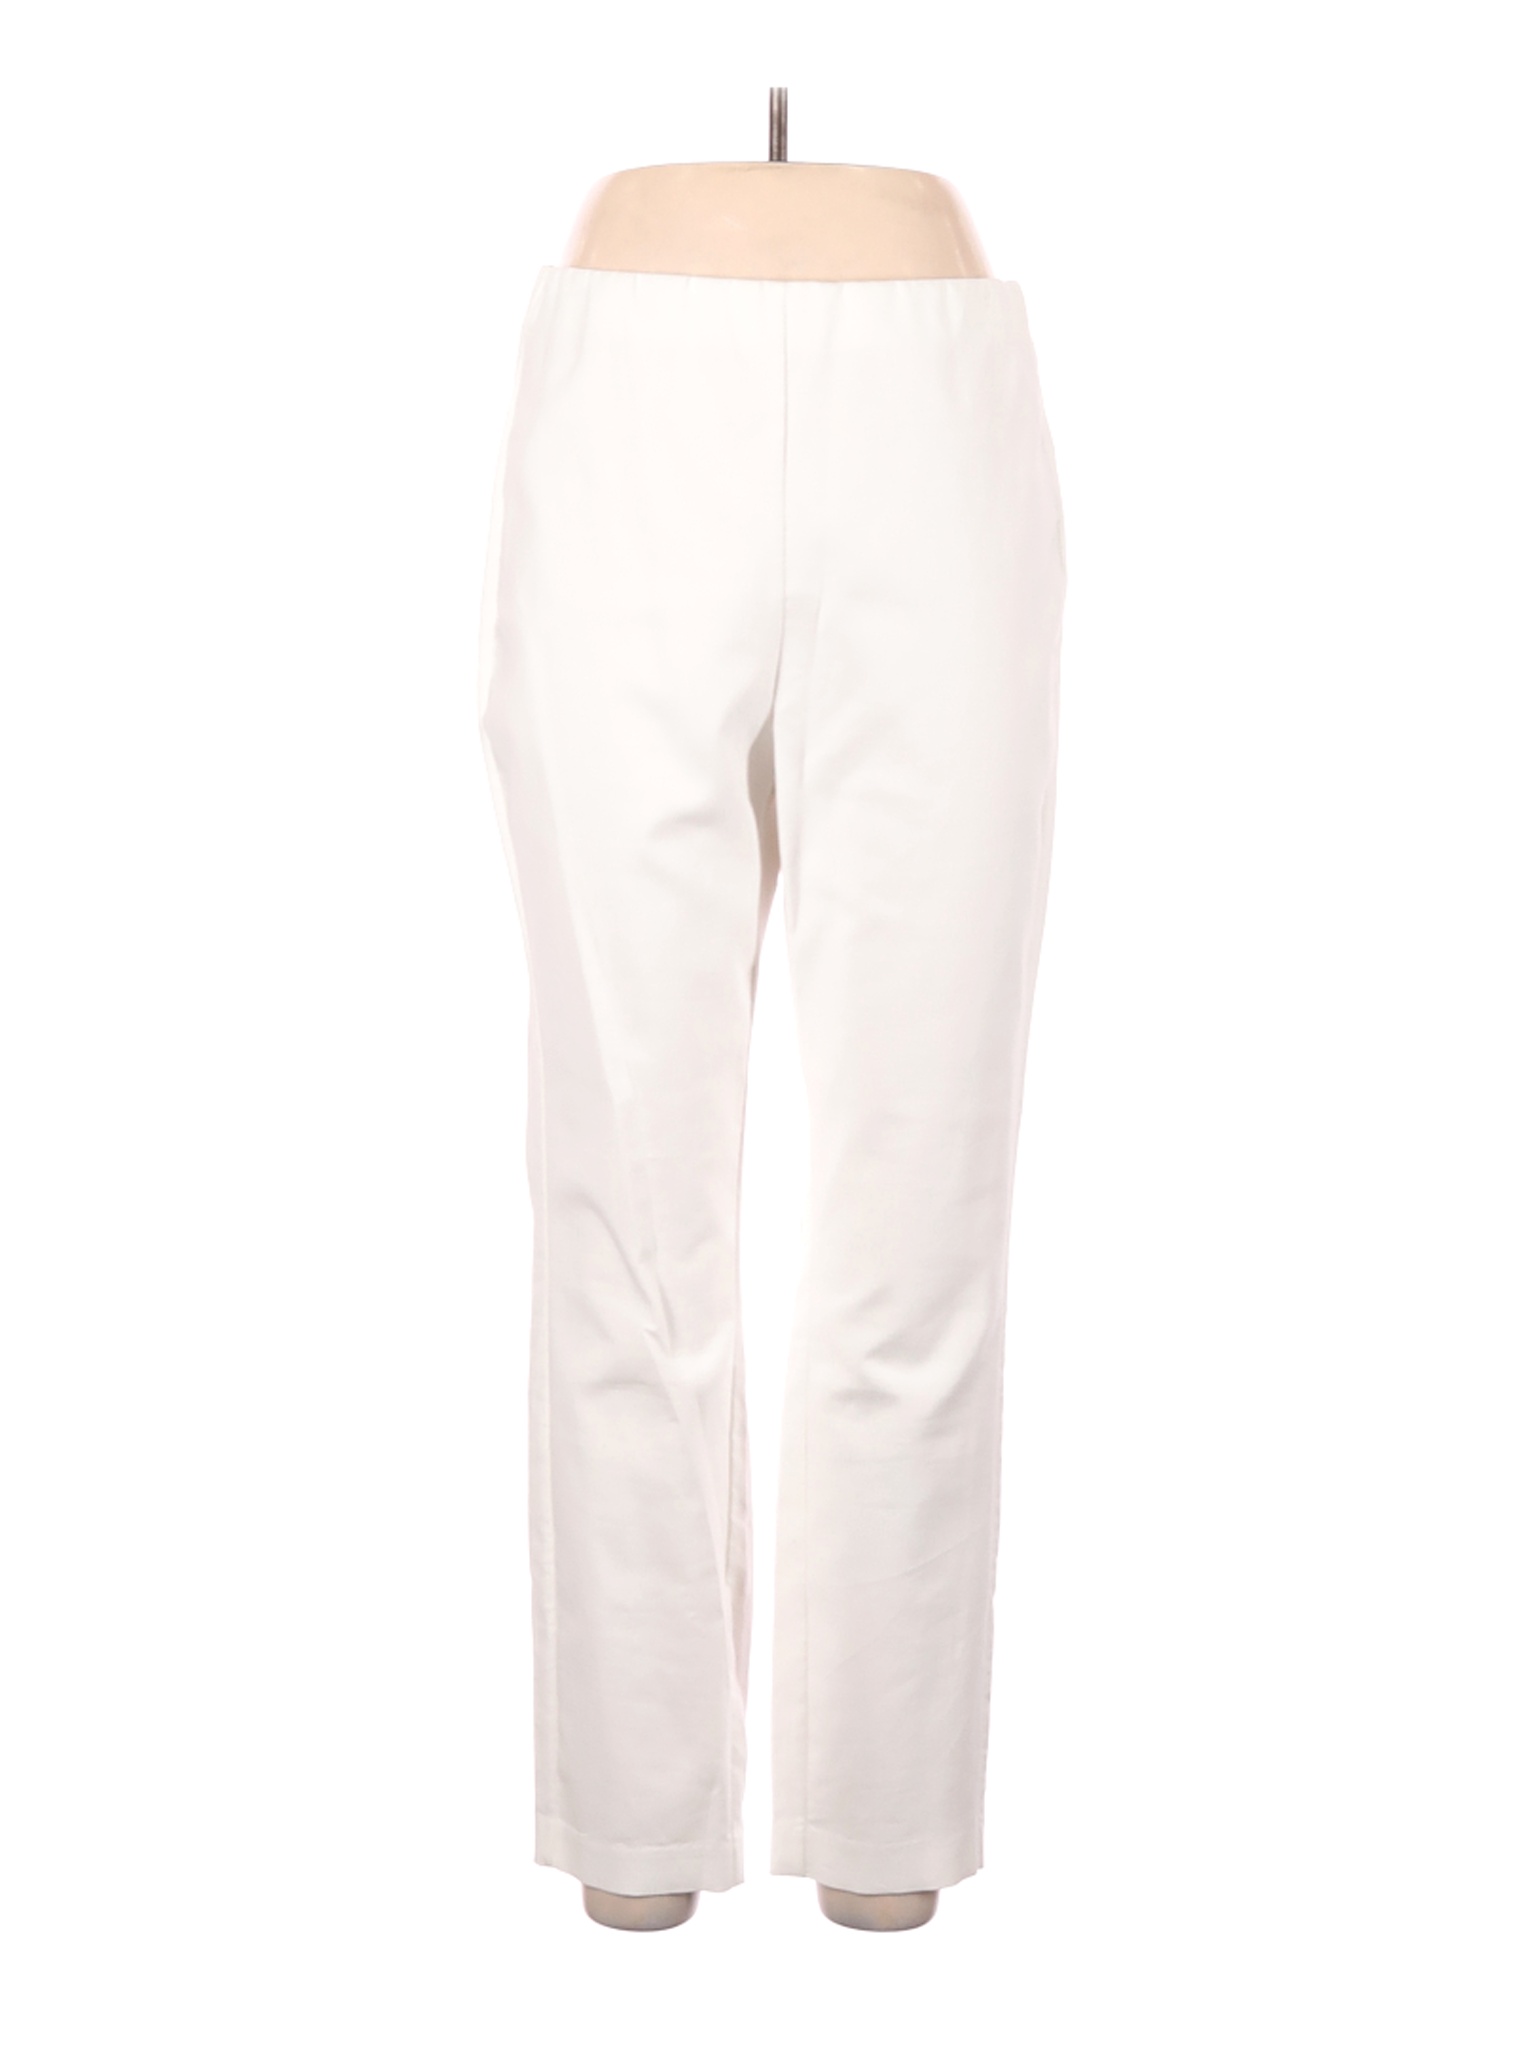 NWT Rag & Bone Women White Casual Pants 12 | eBay